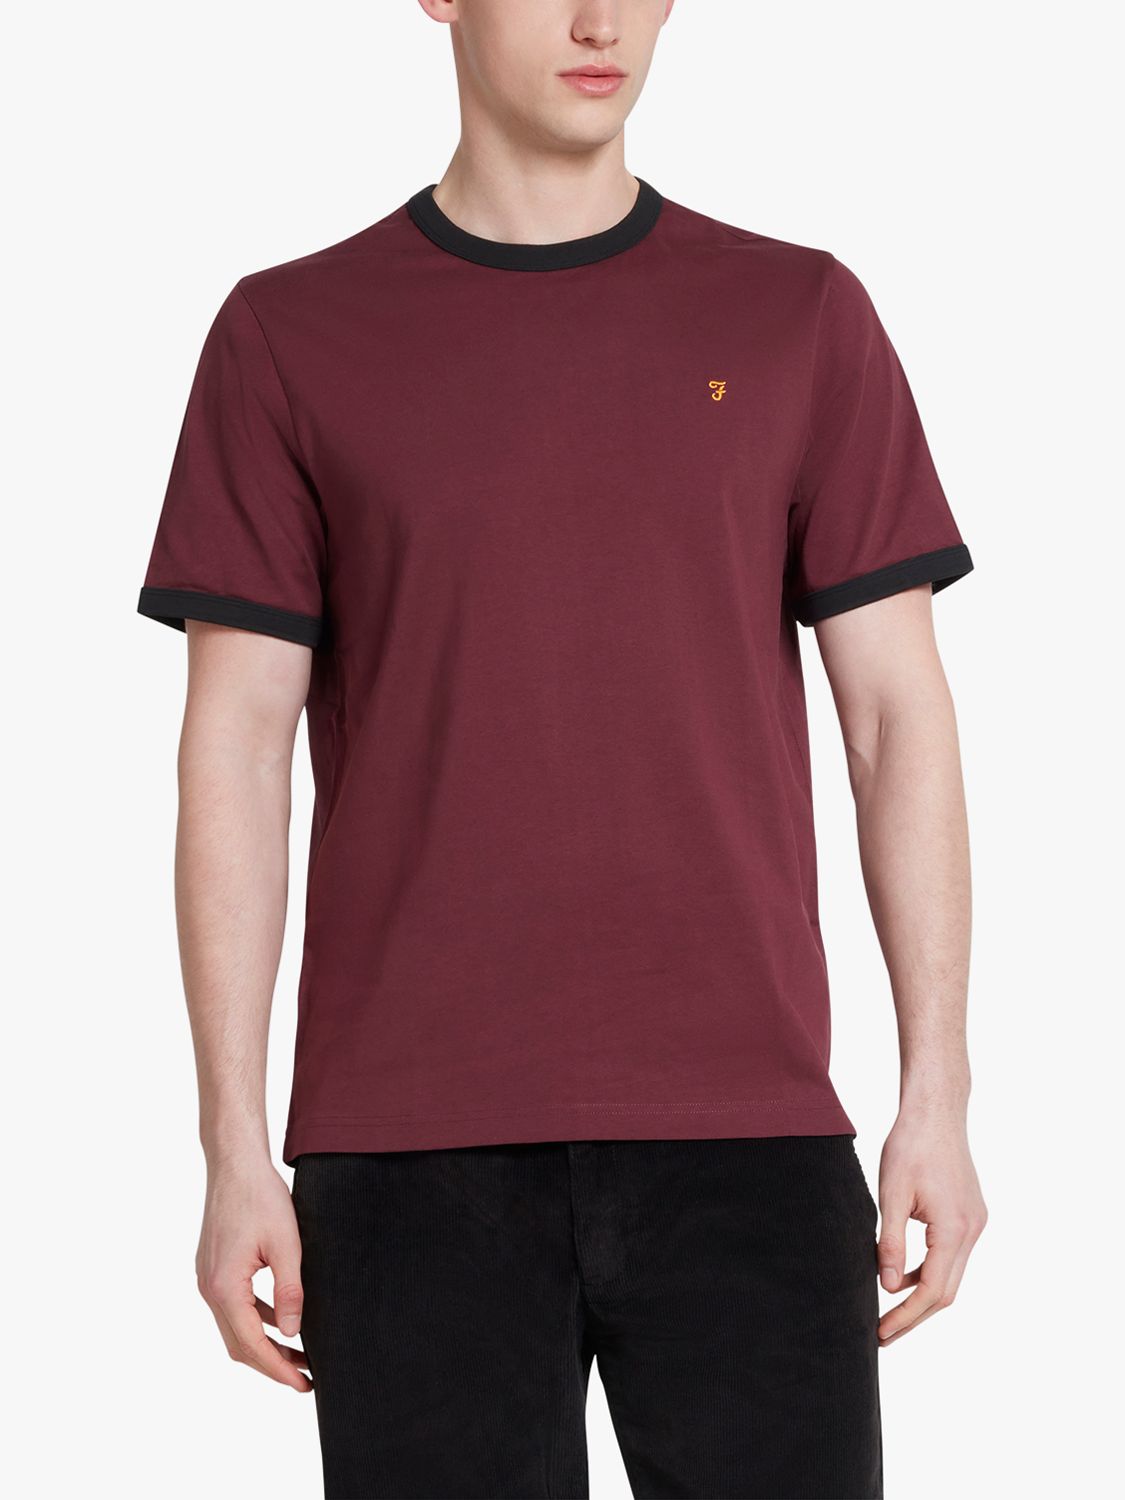 Farah Groves Ringer Short Sleeve T-Shirt, Farah Red, L